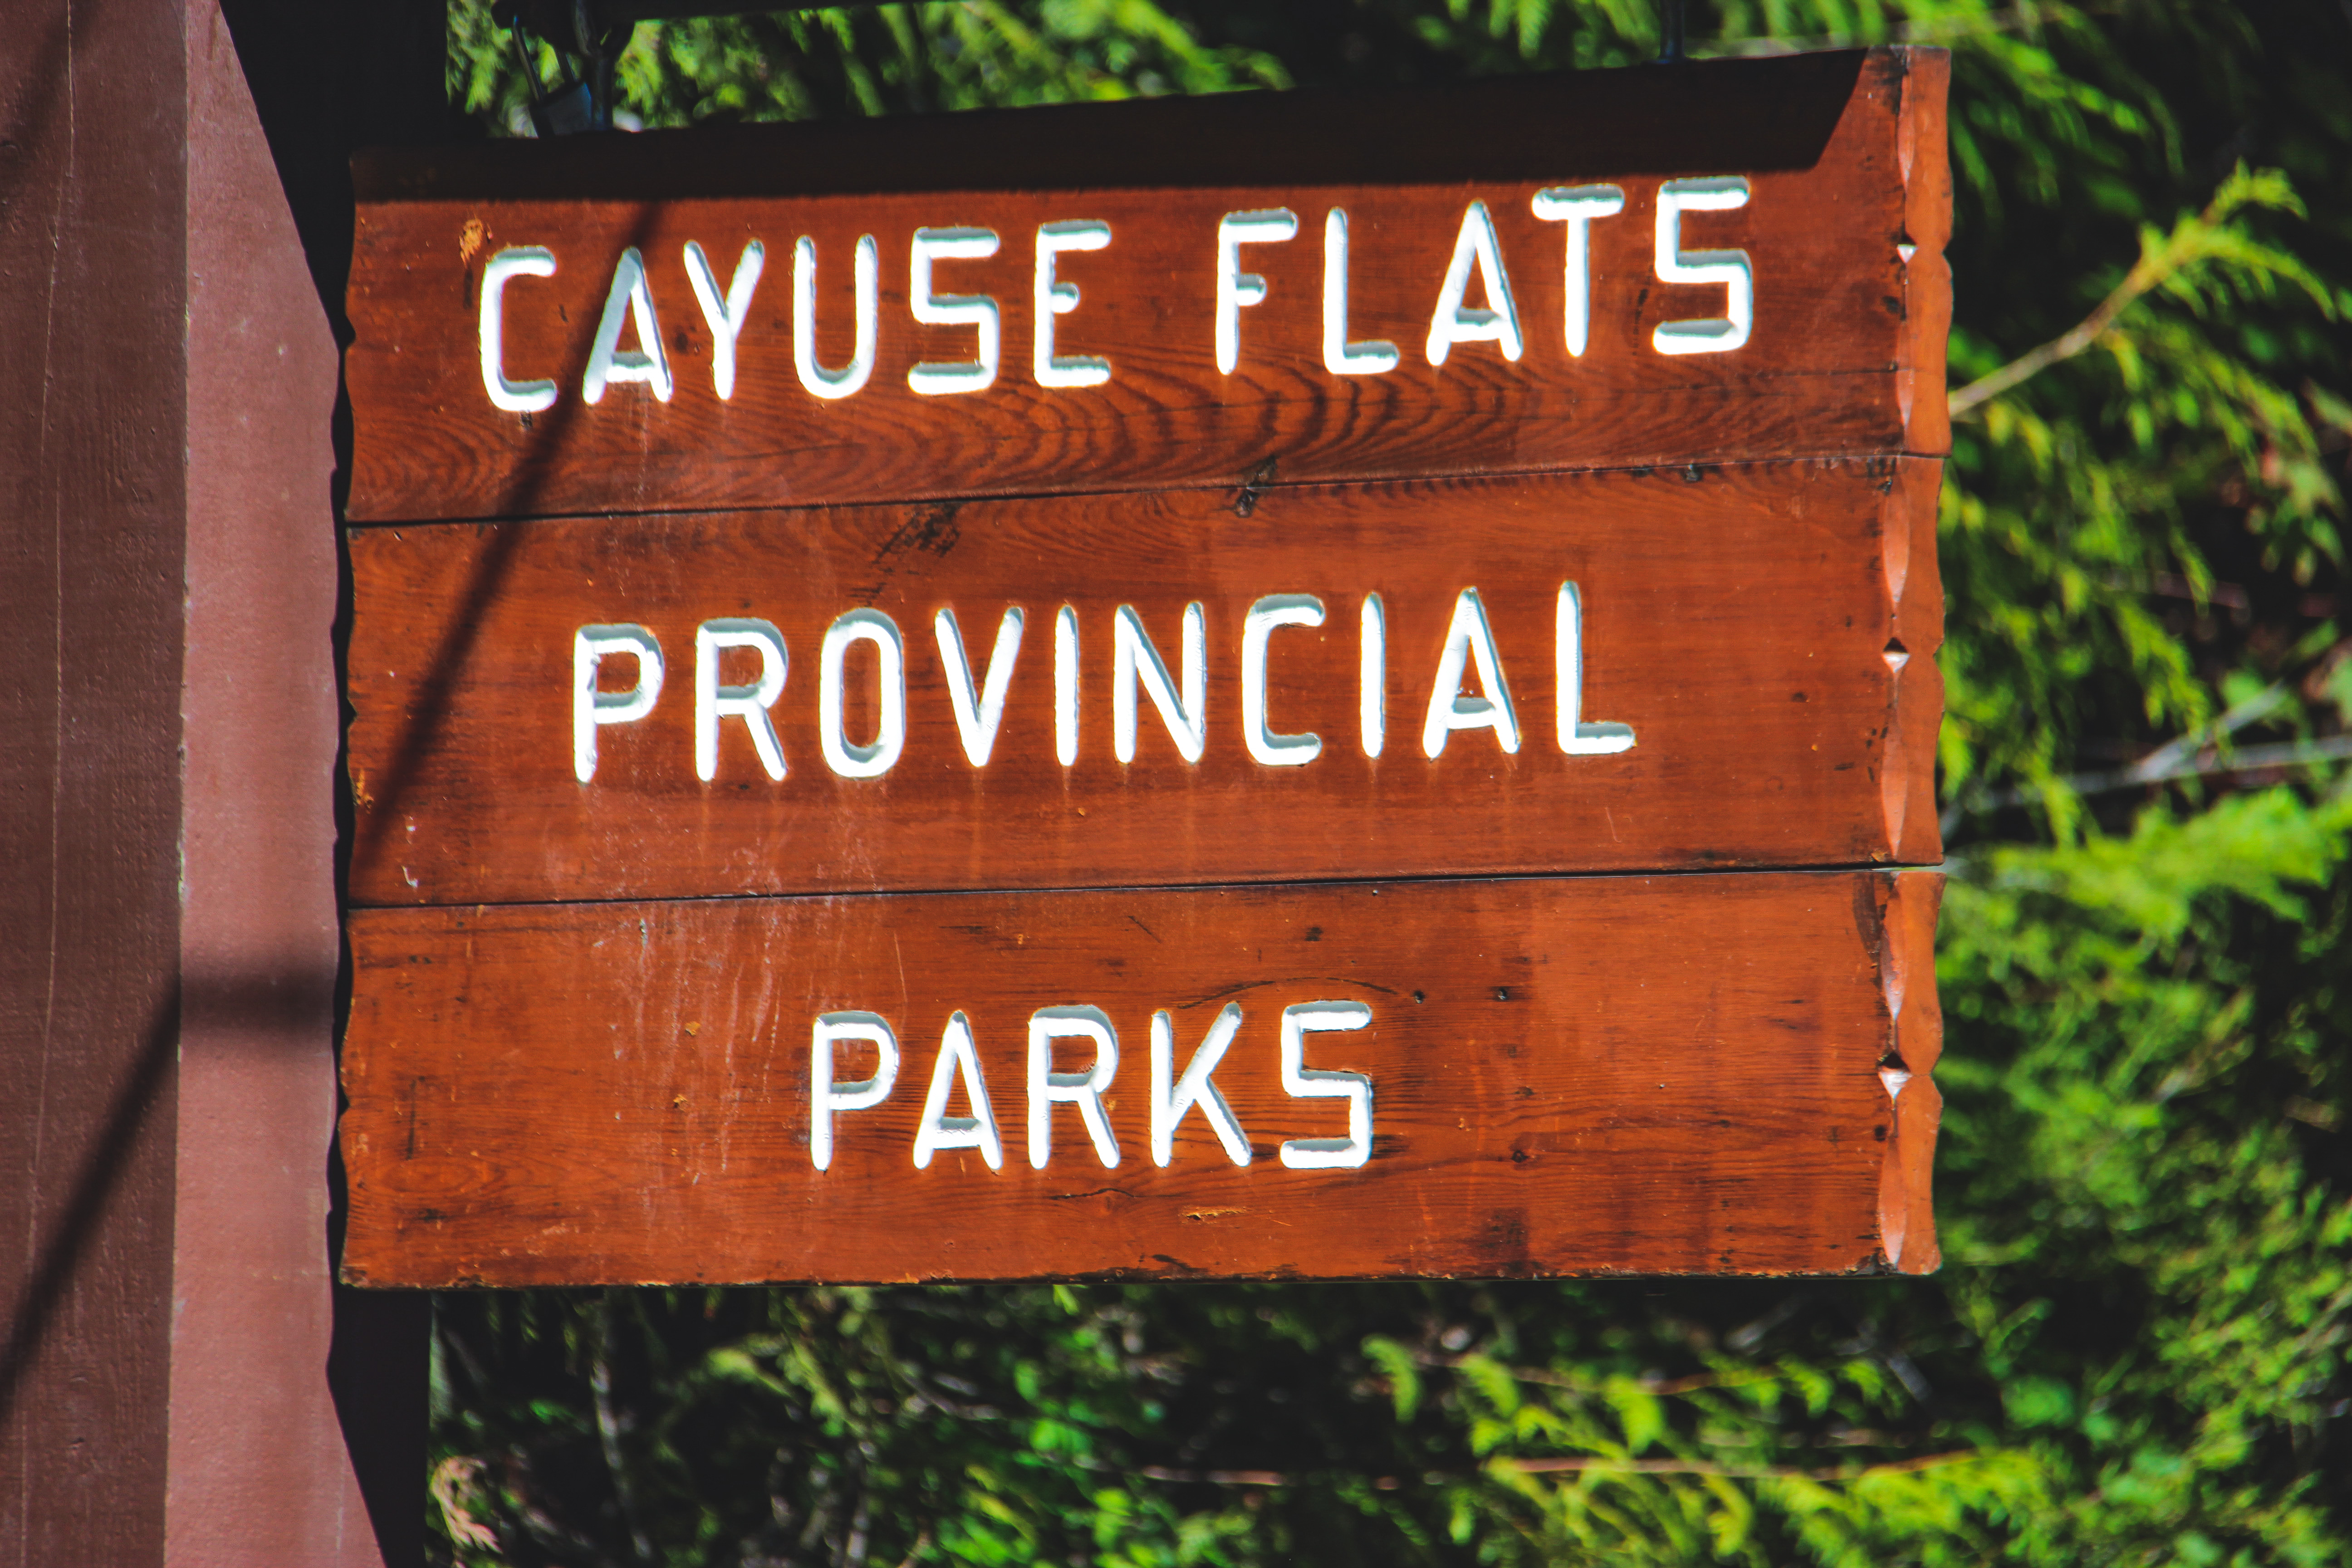 Cayuse Flats Provincial Parks sign